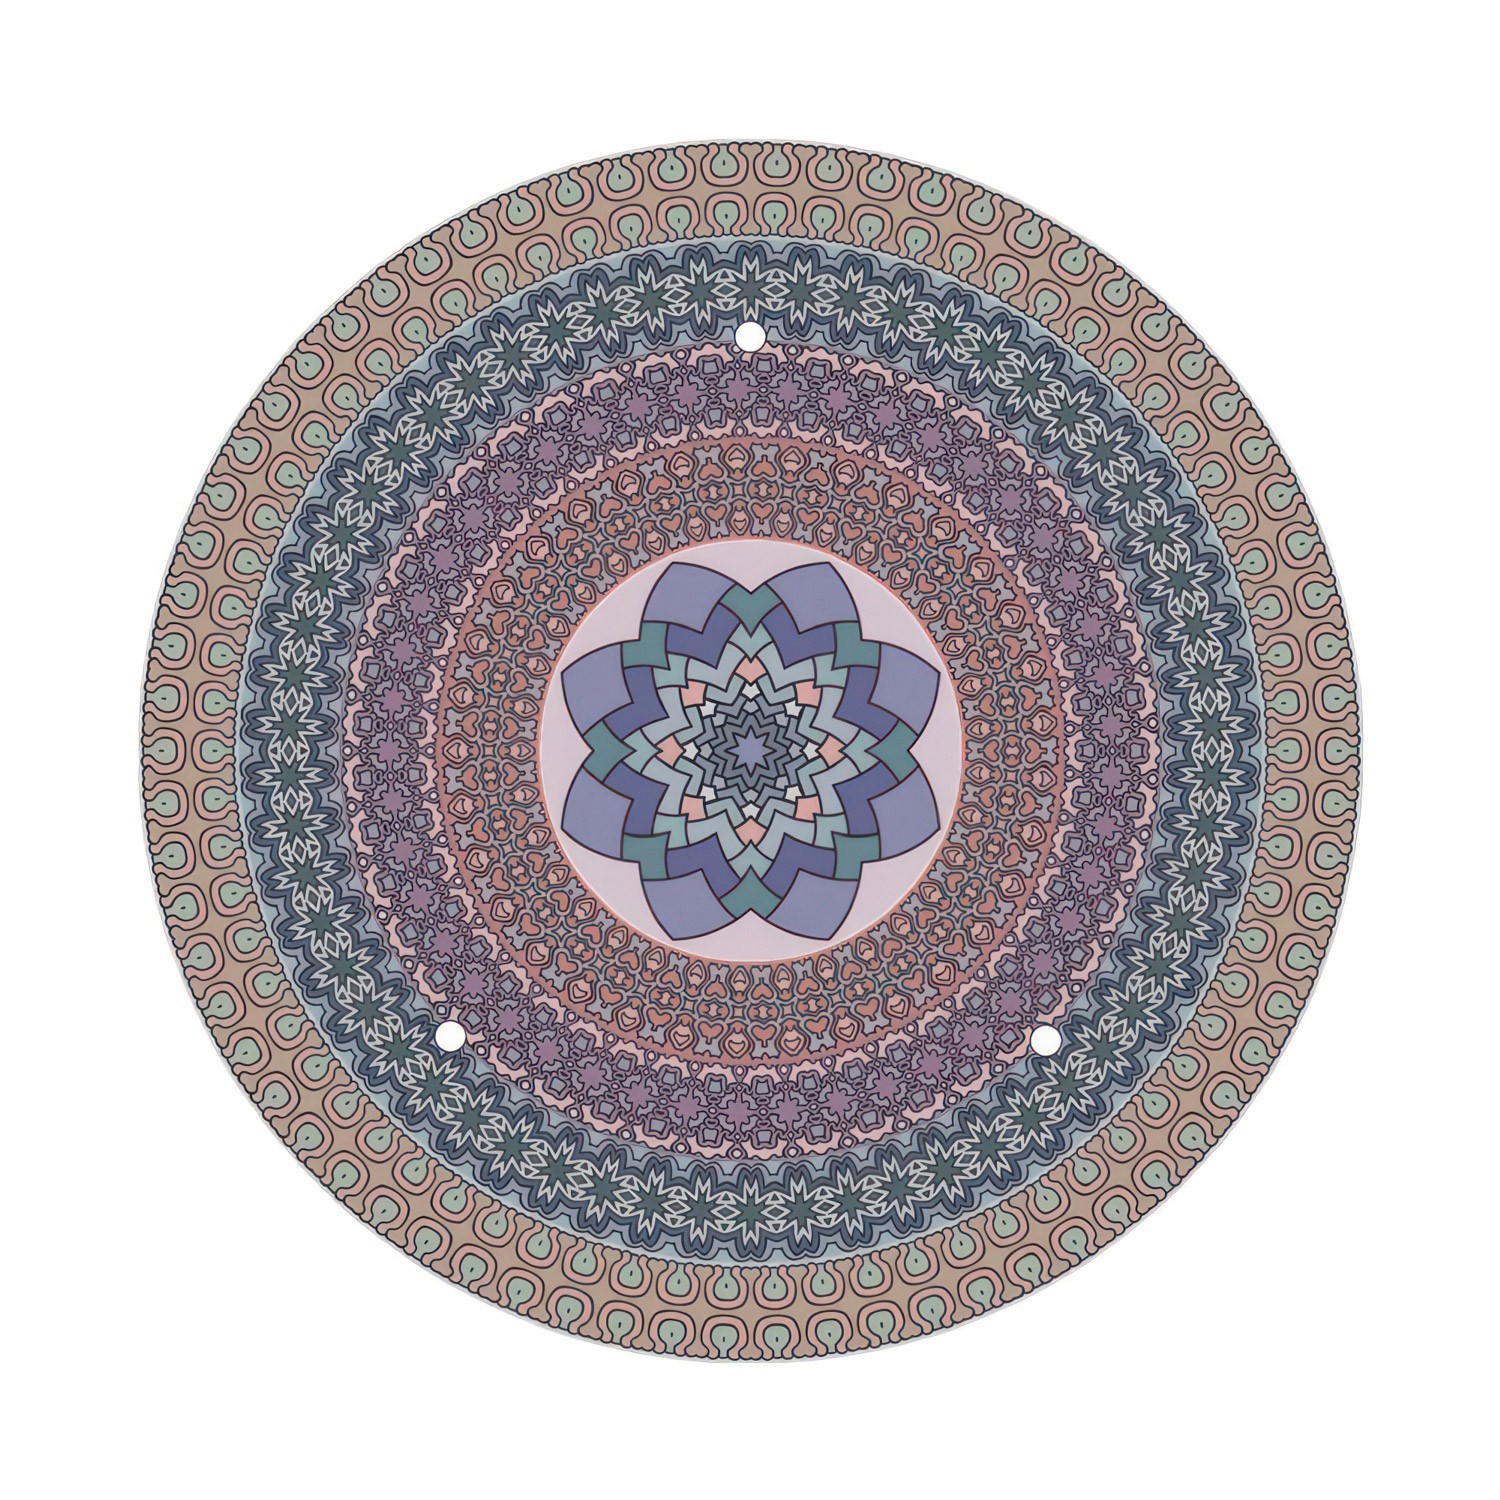 Velika okrugla dekoracija za stropnu rozetu 400 mm - Rose-One sistem s 3 rupe i 4 bočne rupe - PROMO